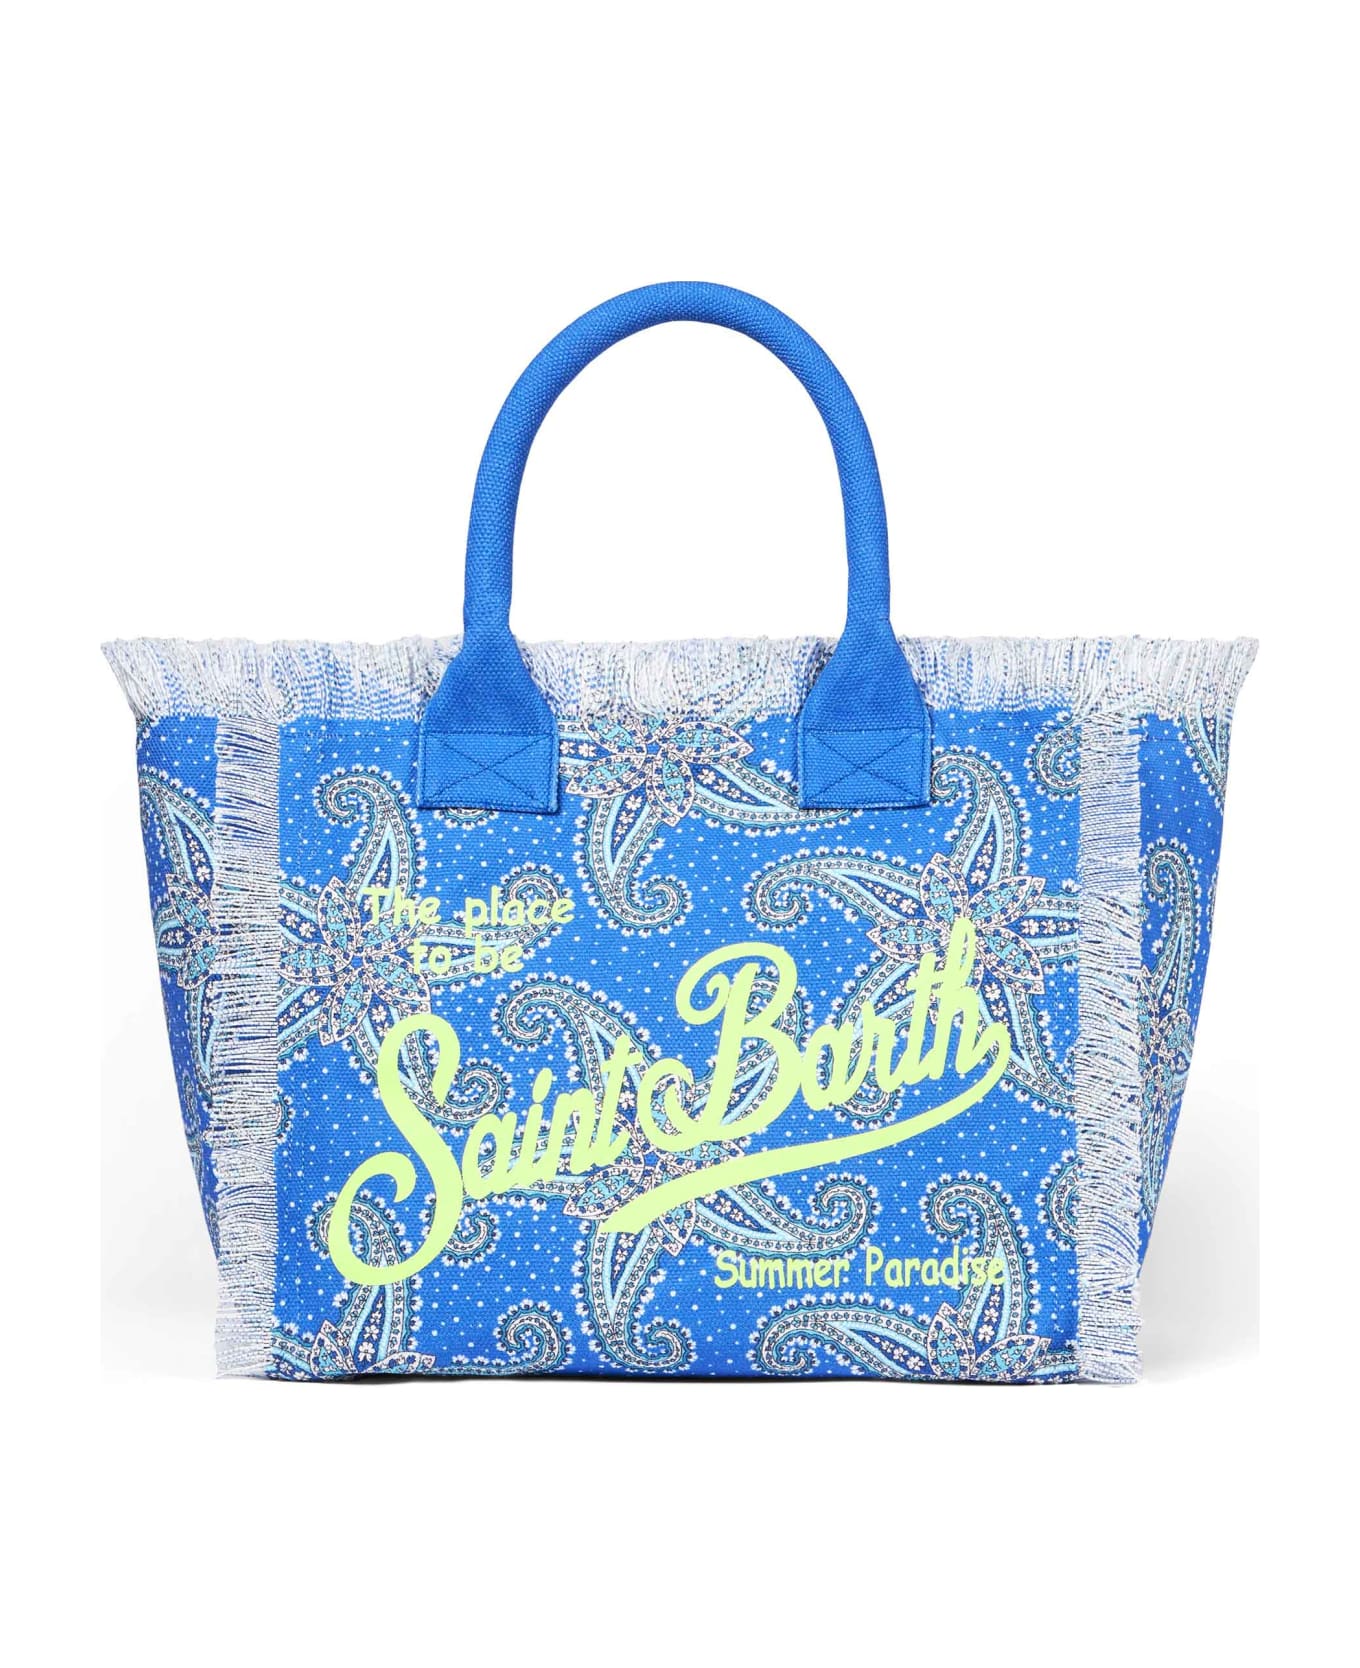 MC2 Saint Barth Vanity Canvas Shoulder Bag With Paisley Star Print - BLUE